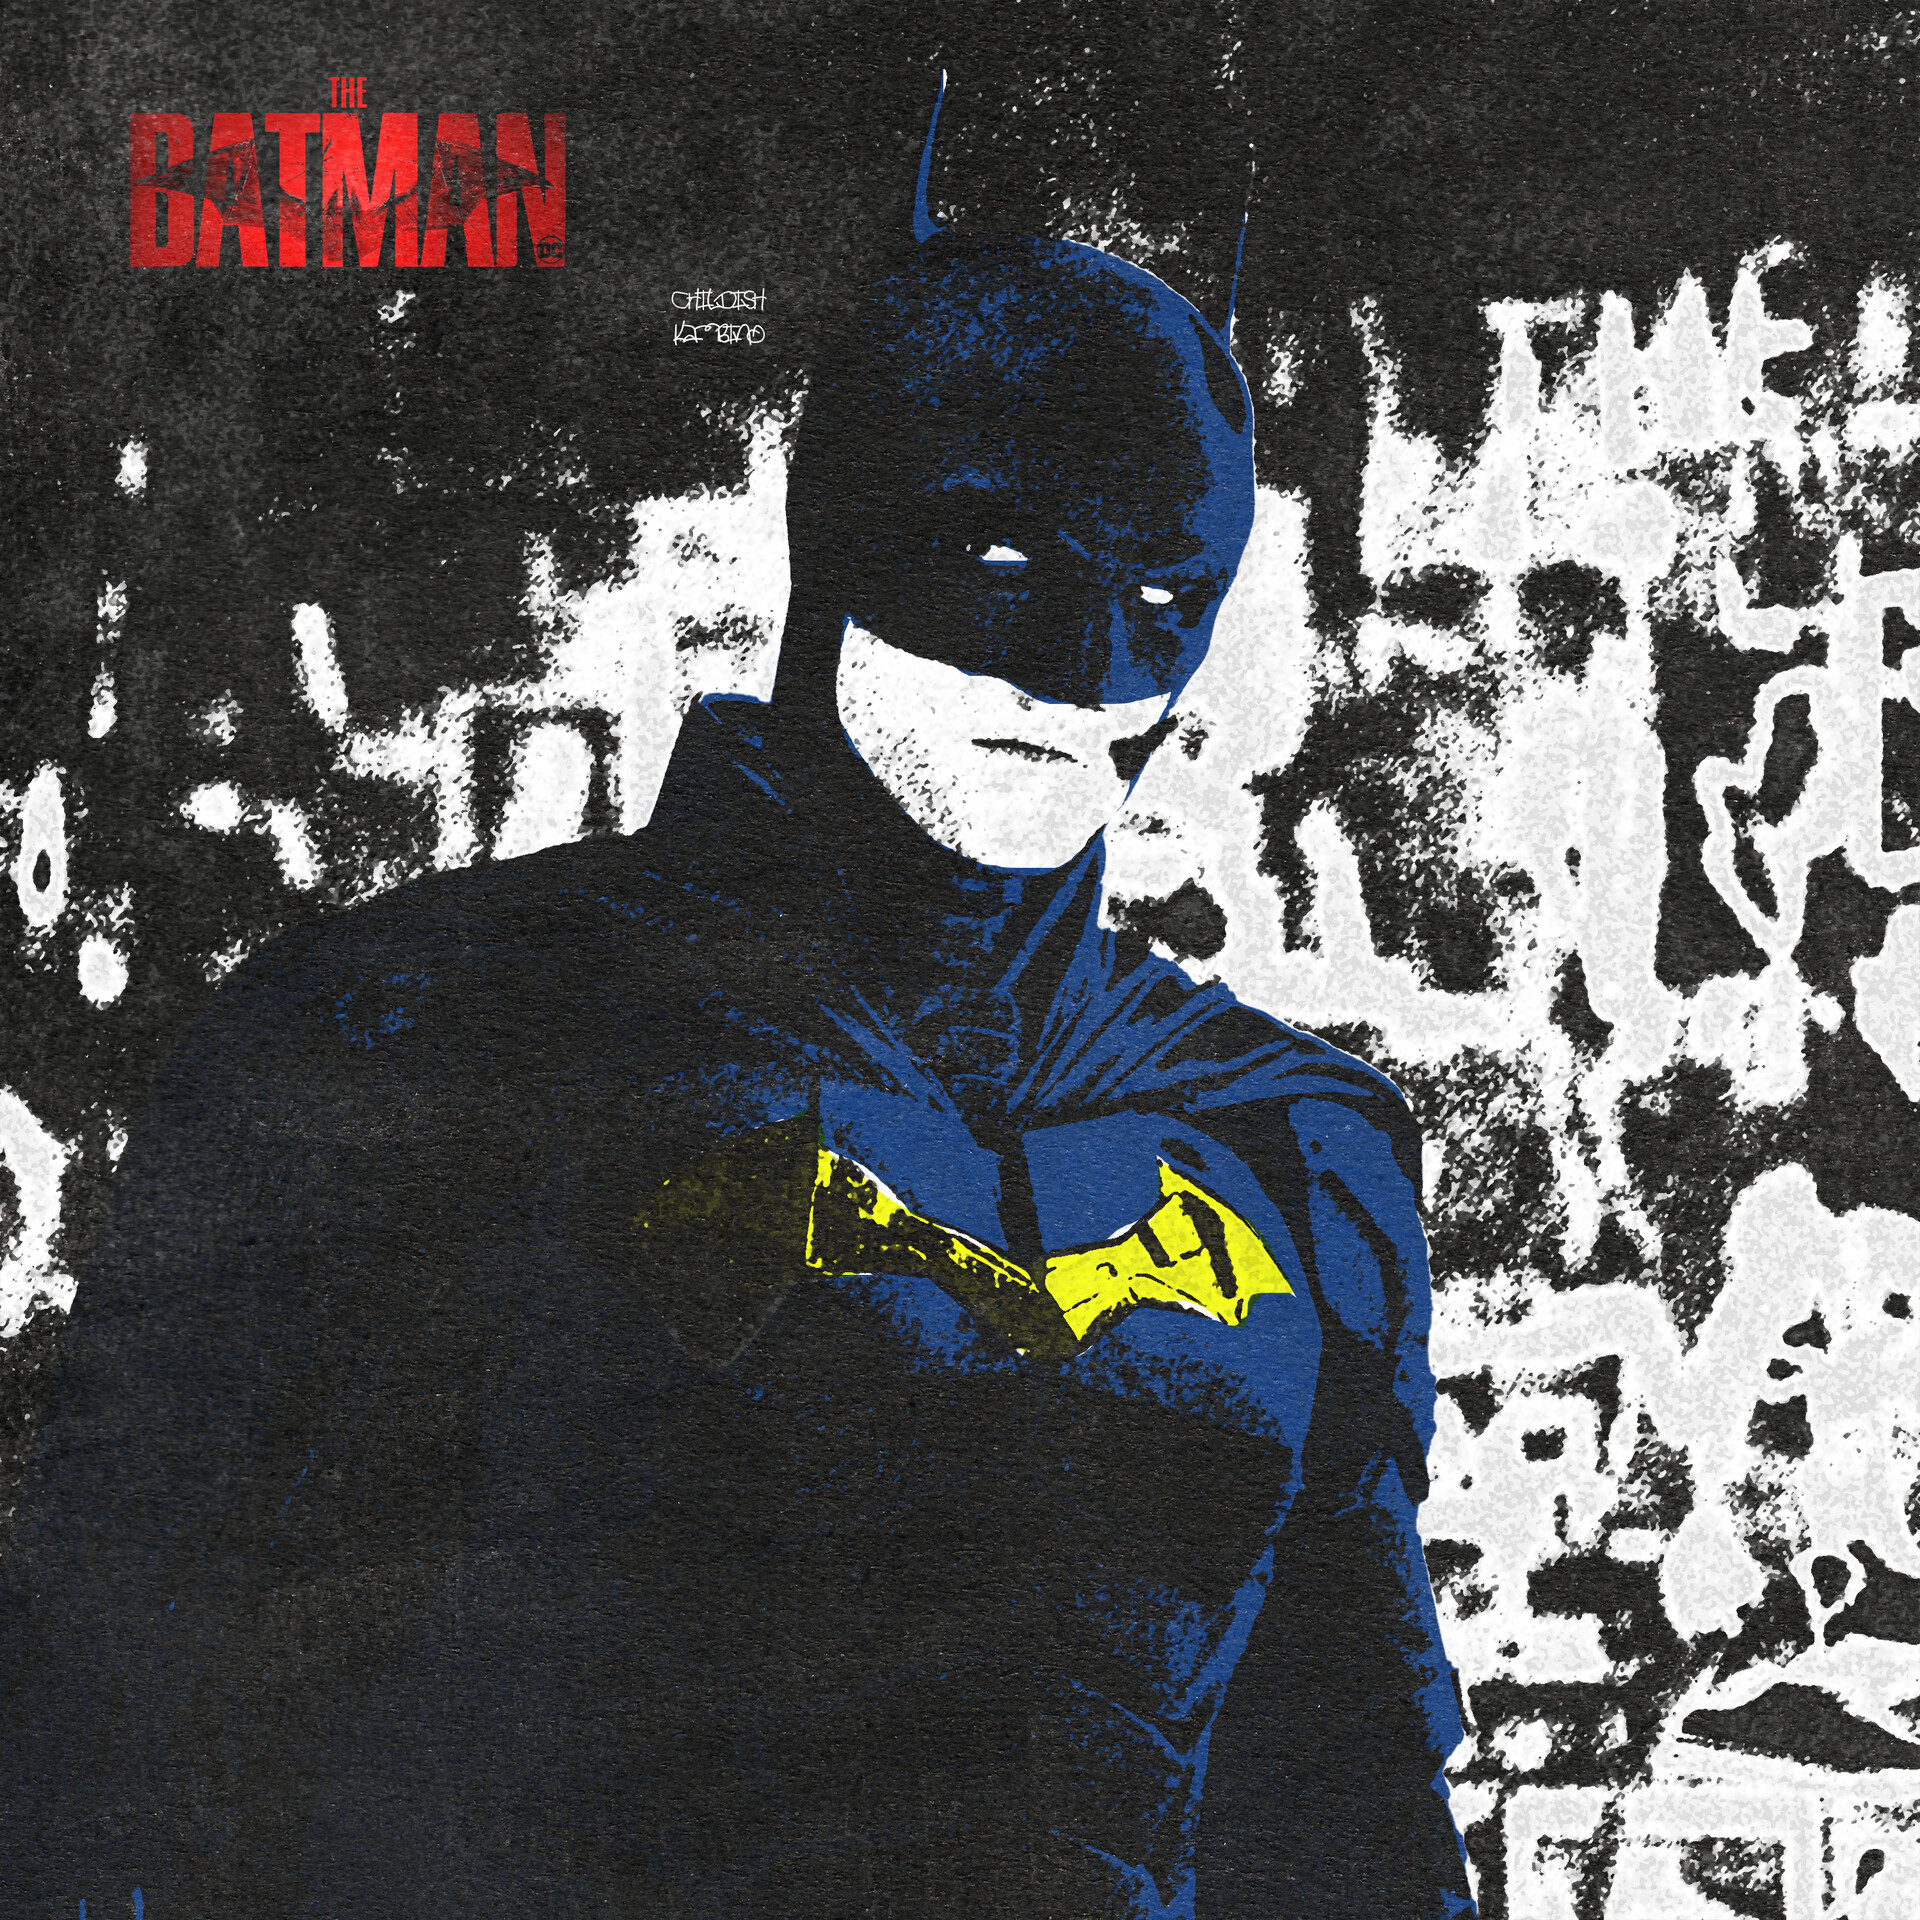 ArtStation - The Batman Pop Art Posters